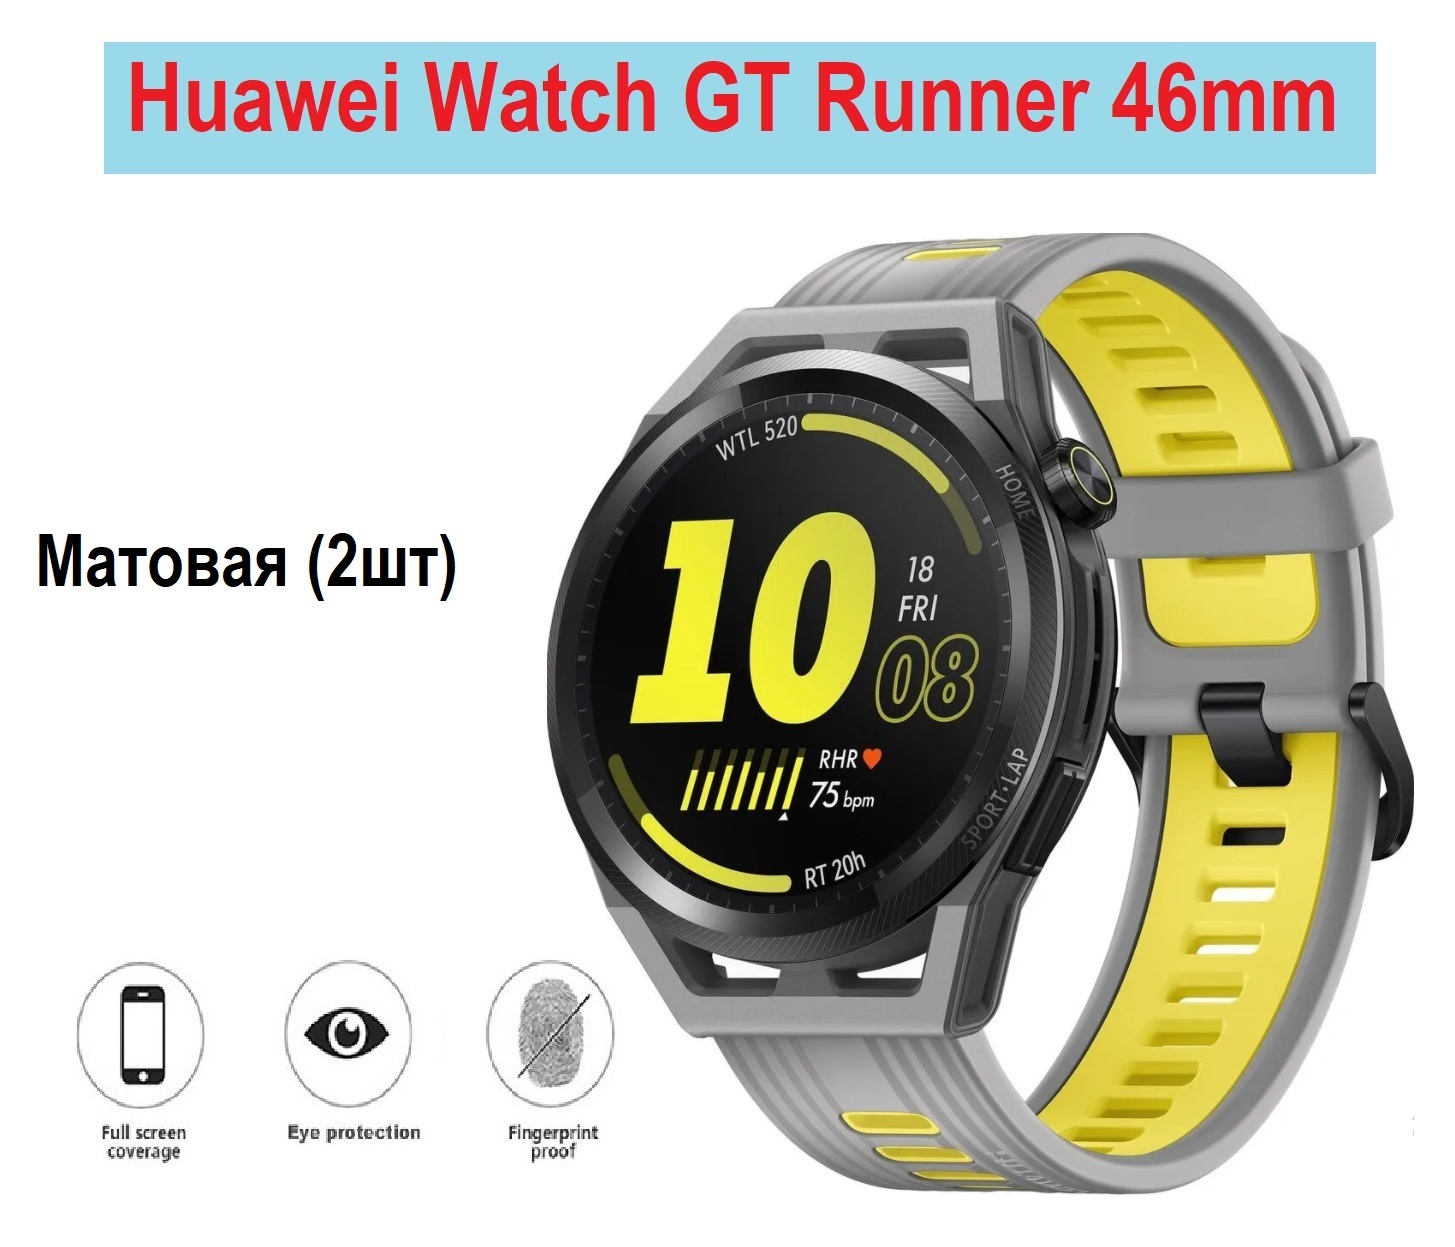 Как настроить часы huawei gt. Смарт-часы Хуавей gt4. Хуавей вотч gt раннер. Смарт часы Huawei gt4. Huawei смарт-часы Huawei gt Runner.